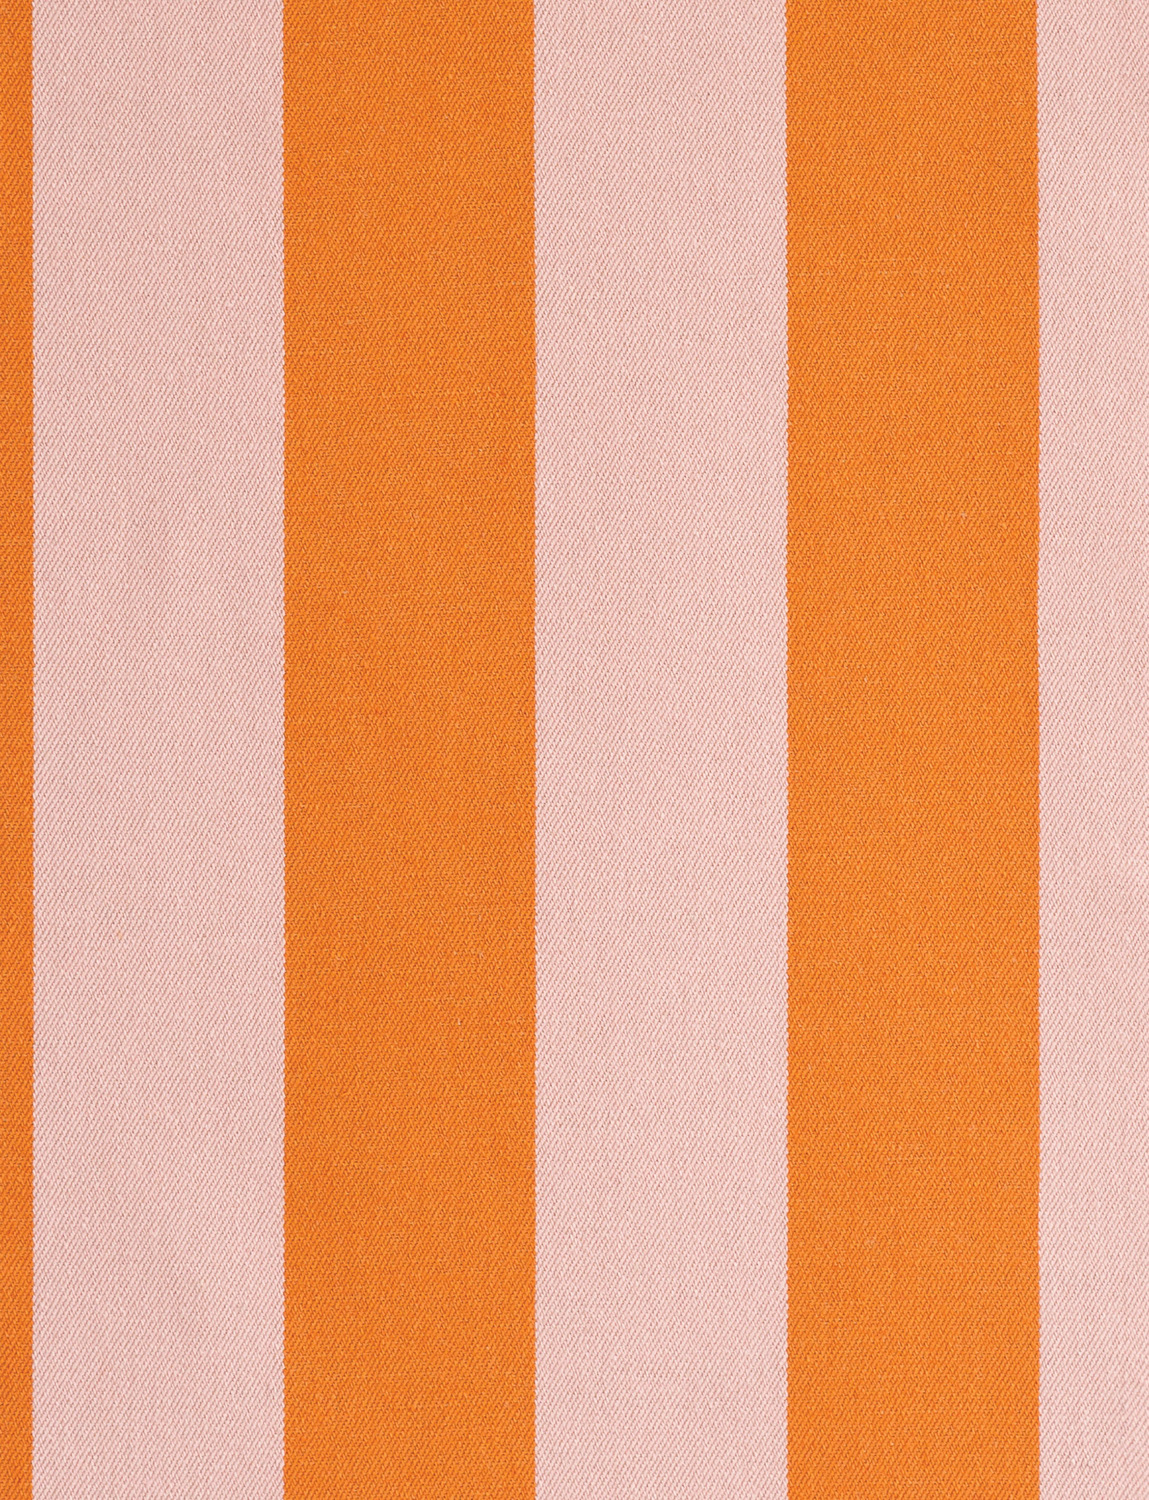 orange striped fabric, suggested by Anastasia Kolesnichenko